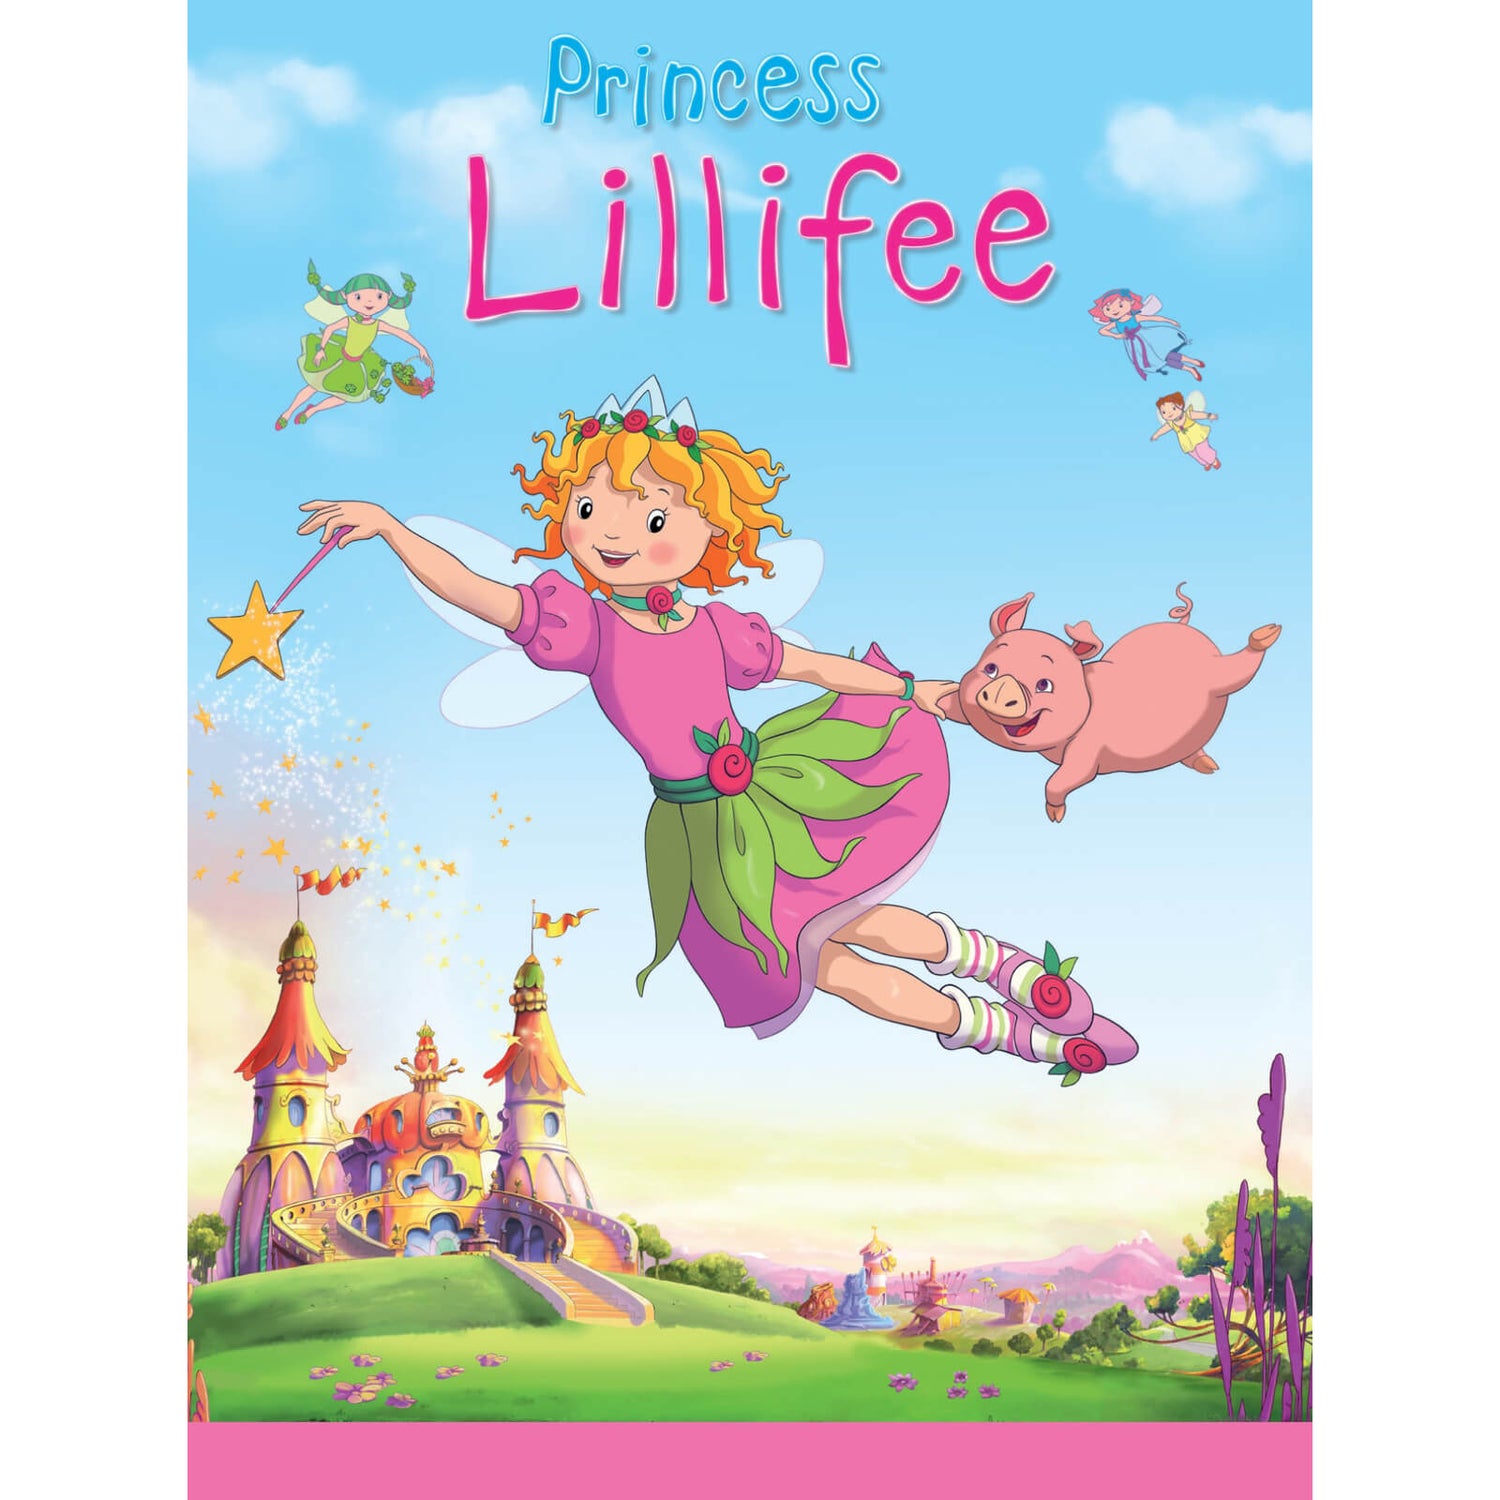 Princess Lillifee